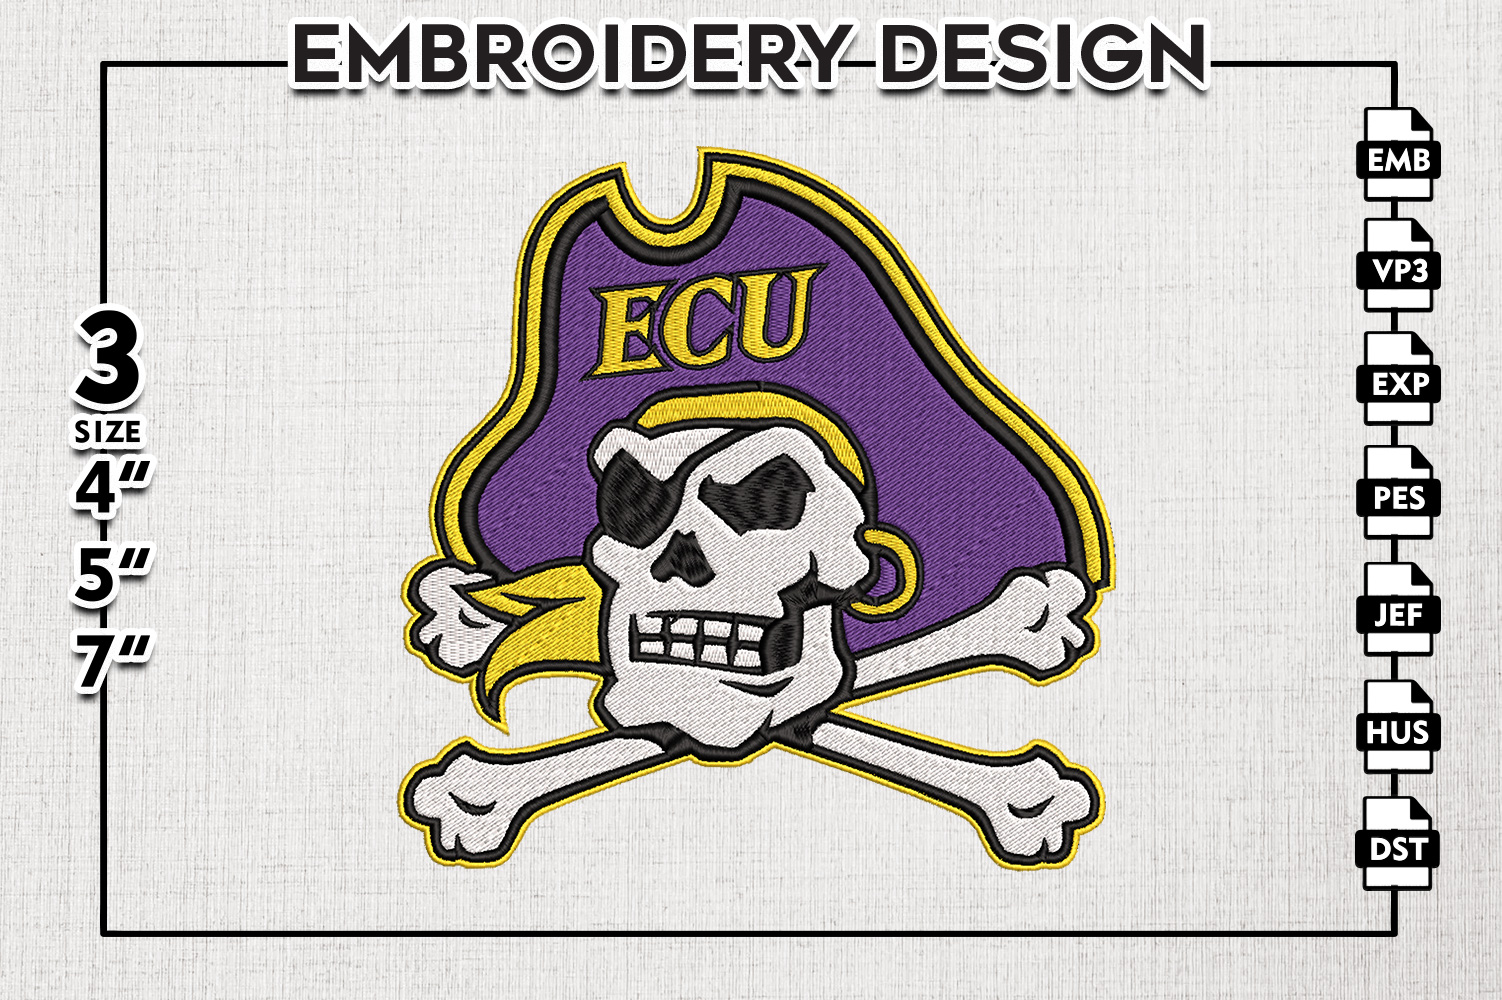 college logo embroidery designs